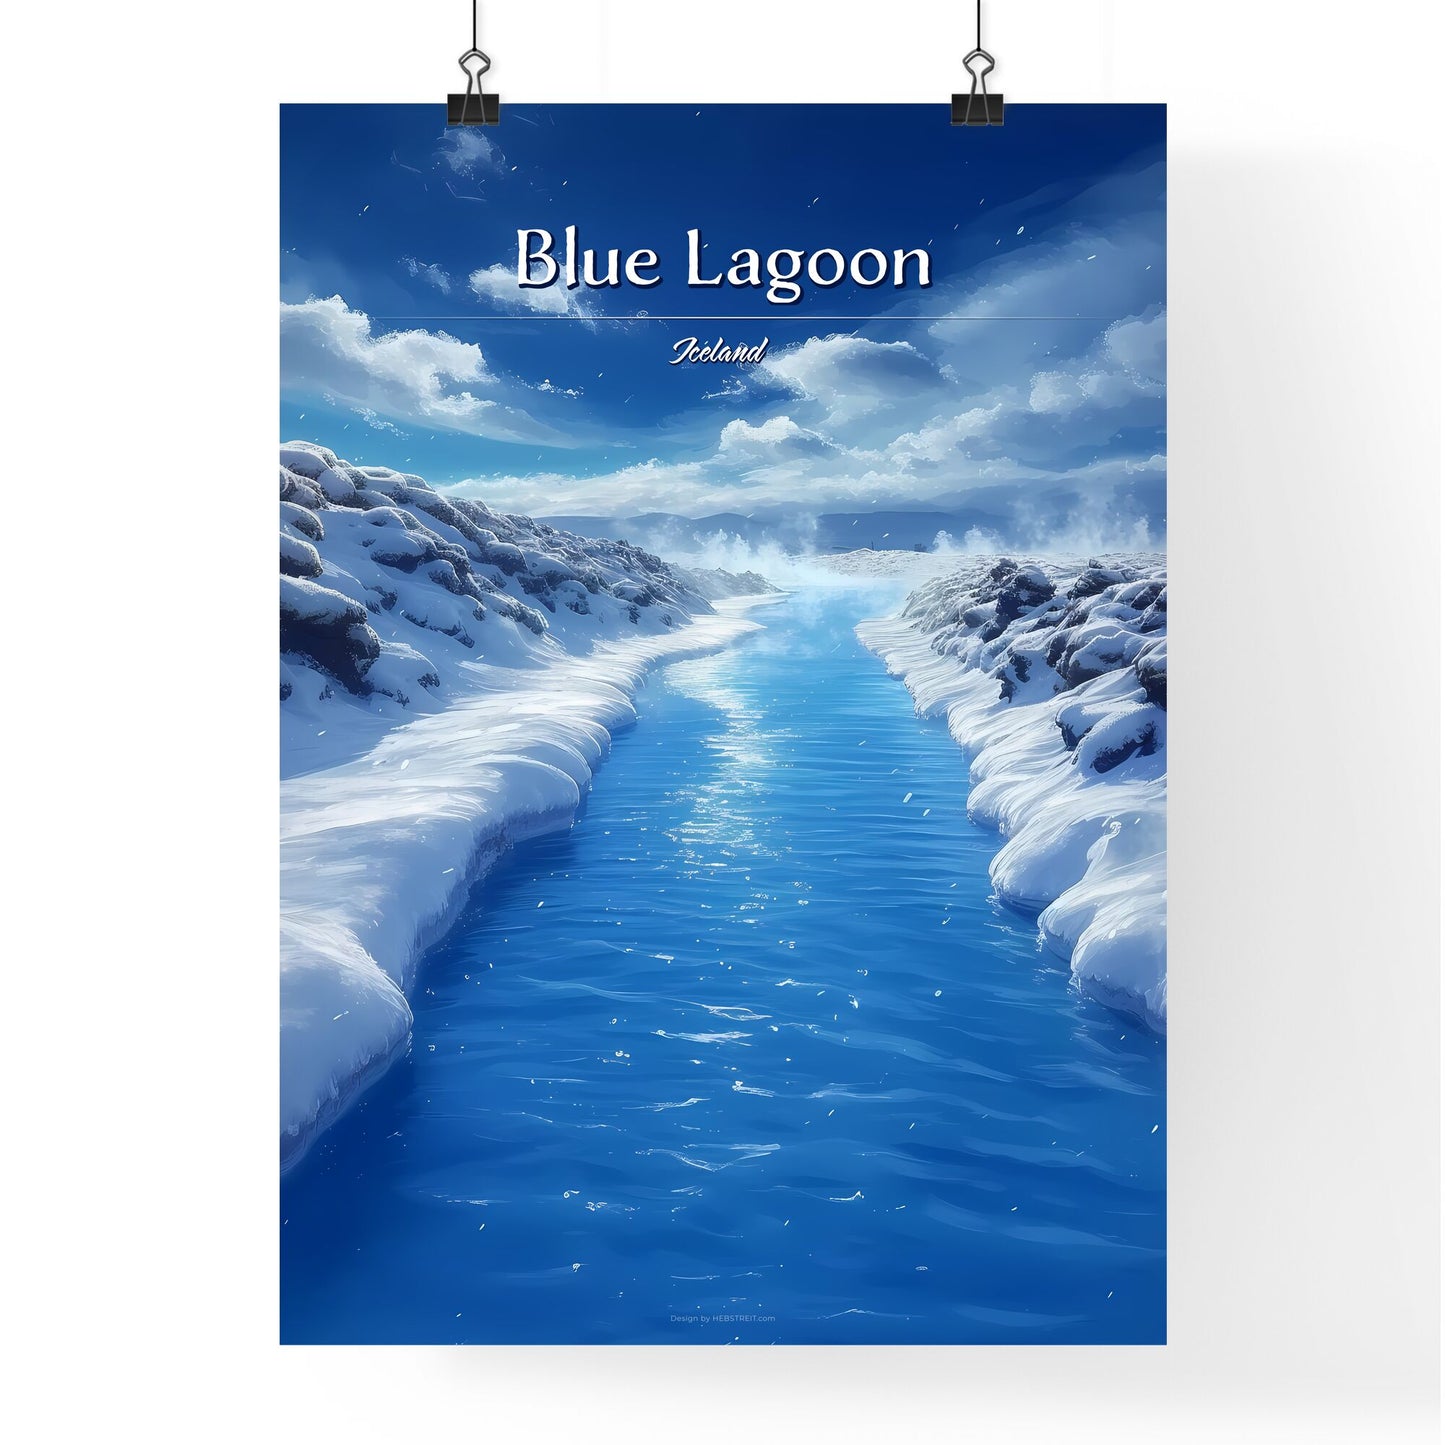 Blue Lagoon, Iceland - Art print of a river running through a snowy landscape Default Title